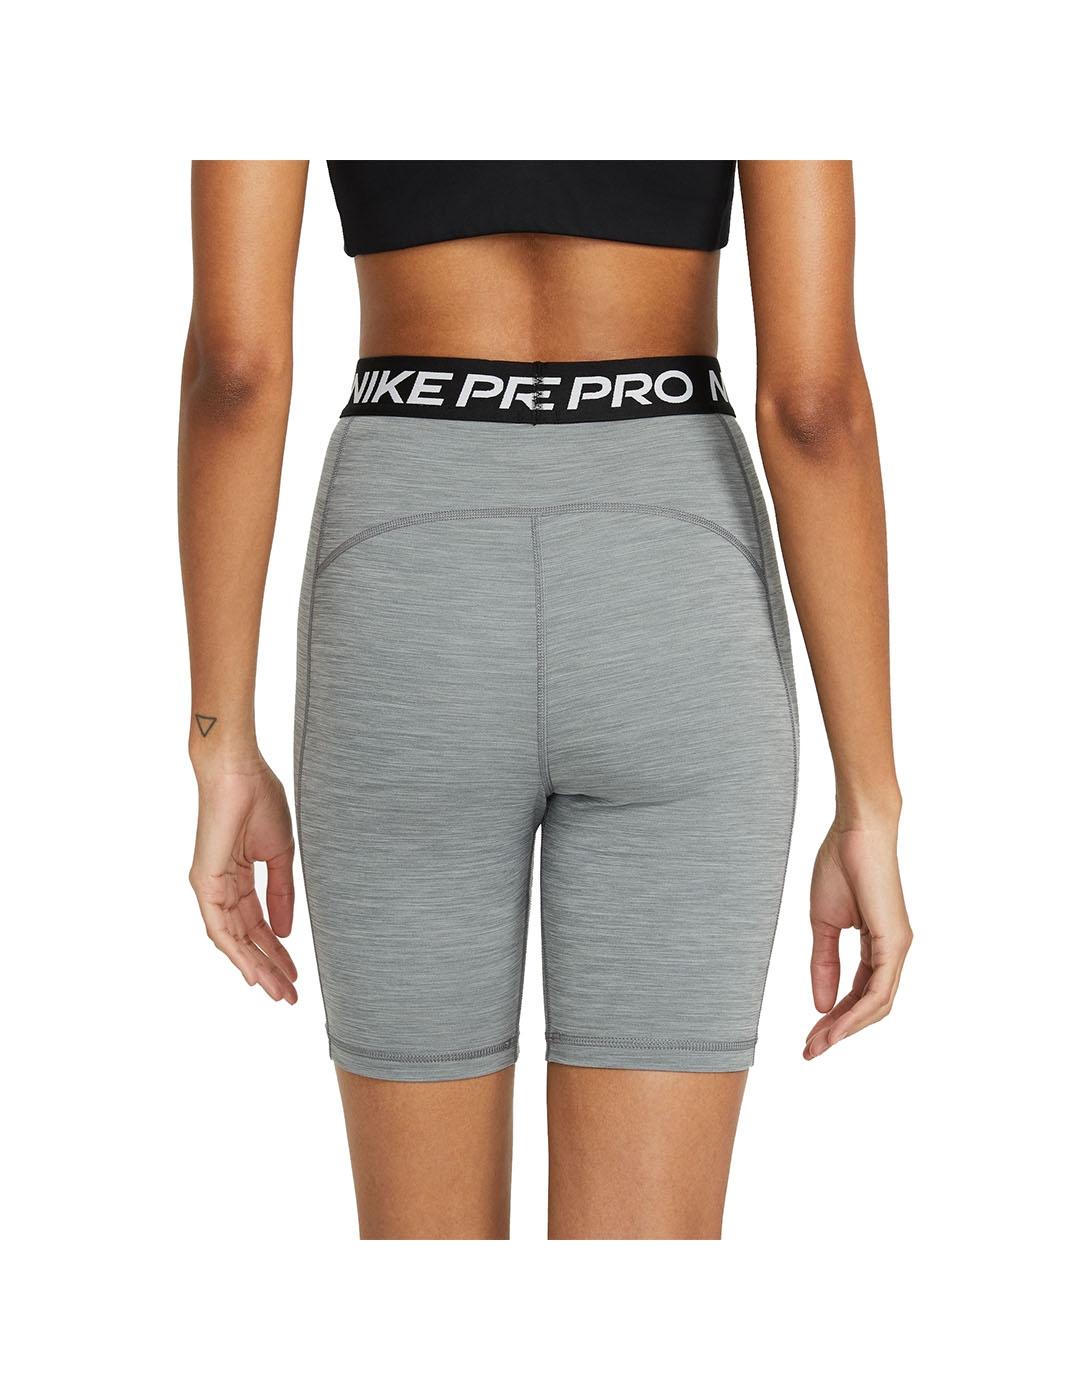 Short Mujer Nike Pro 7 Grises